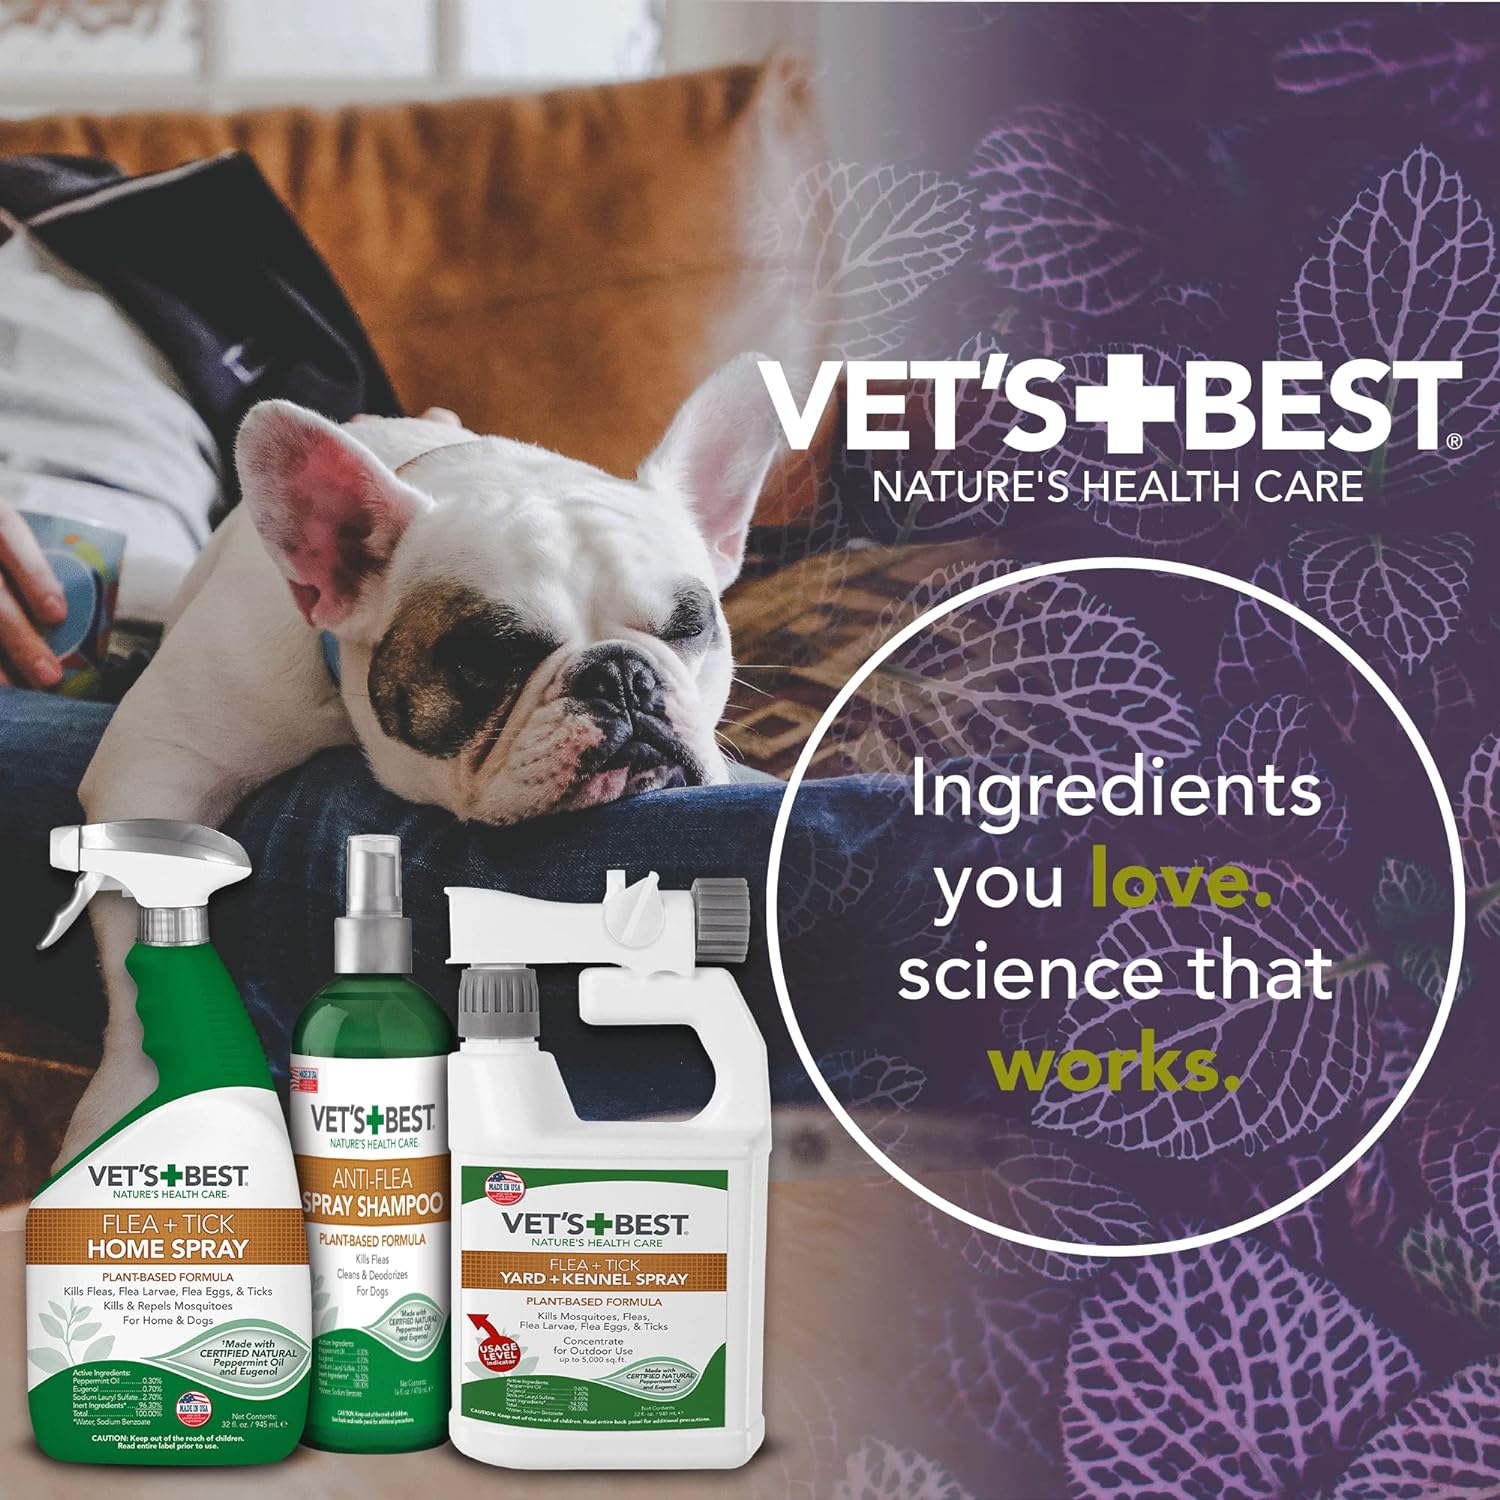 Vet's Best Anti-Flea Spray Shampoo - Dog Flea and Tick Treatment - Plant-Based Formula - Certified Natural Oils - 16 oz : Pet Flea And Tick Sprays : Pet Supplies